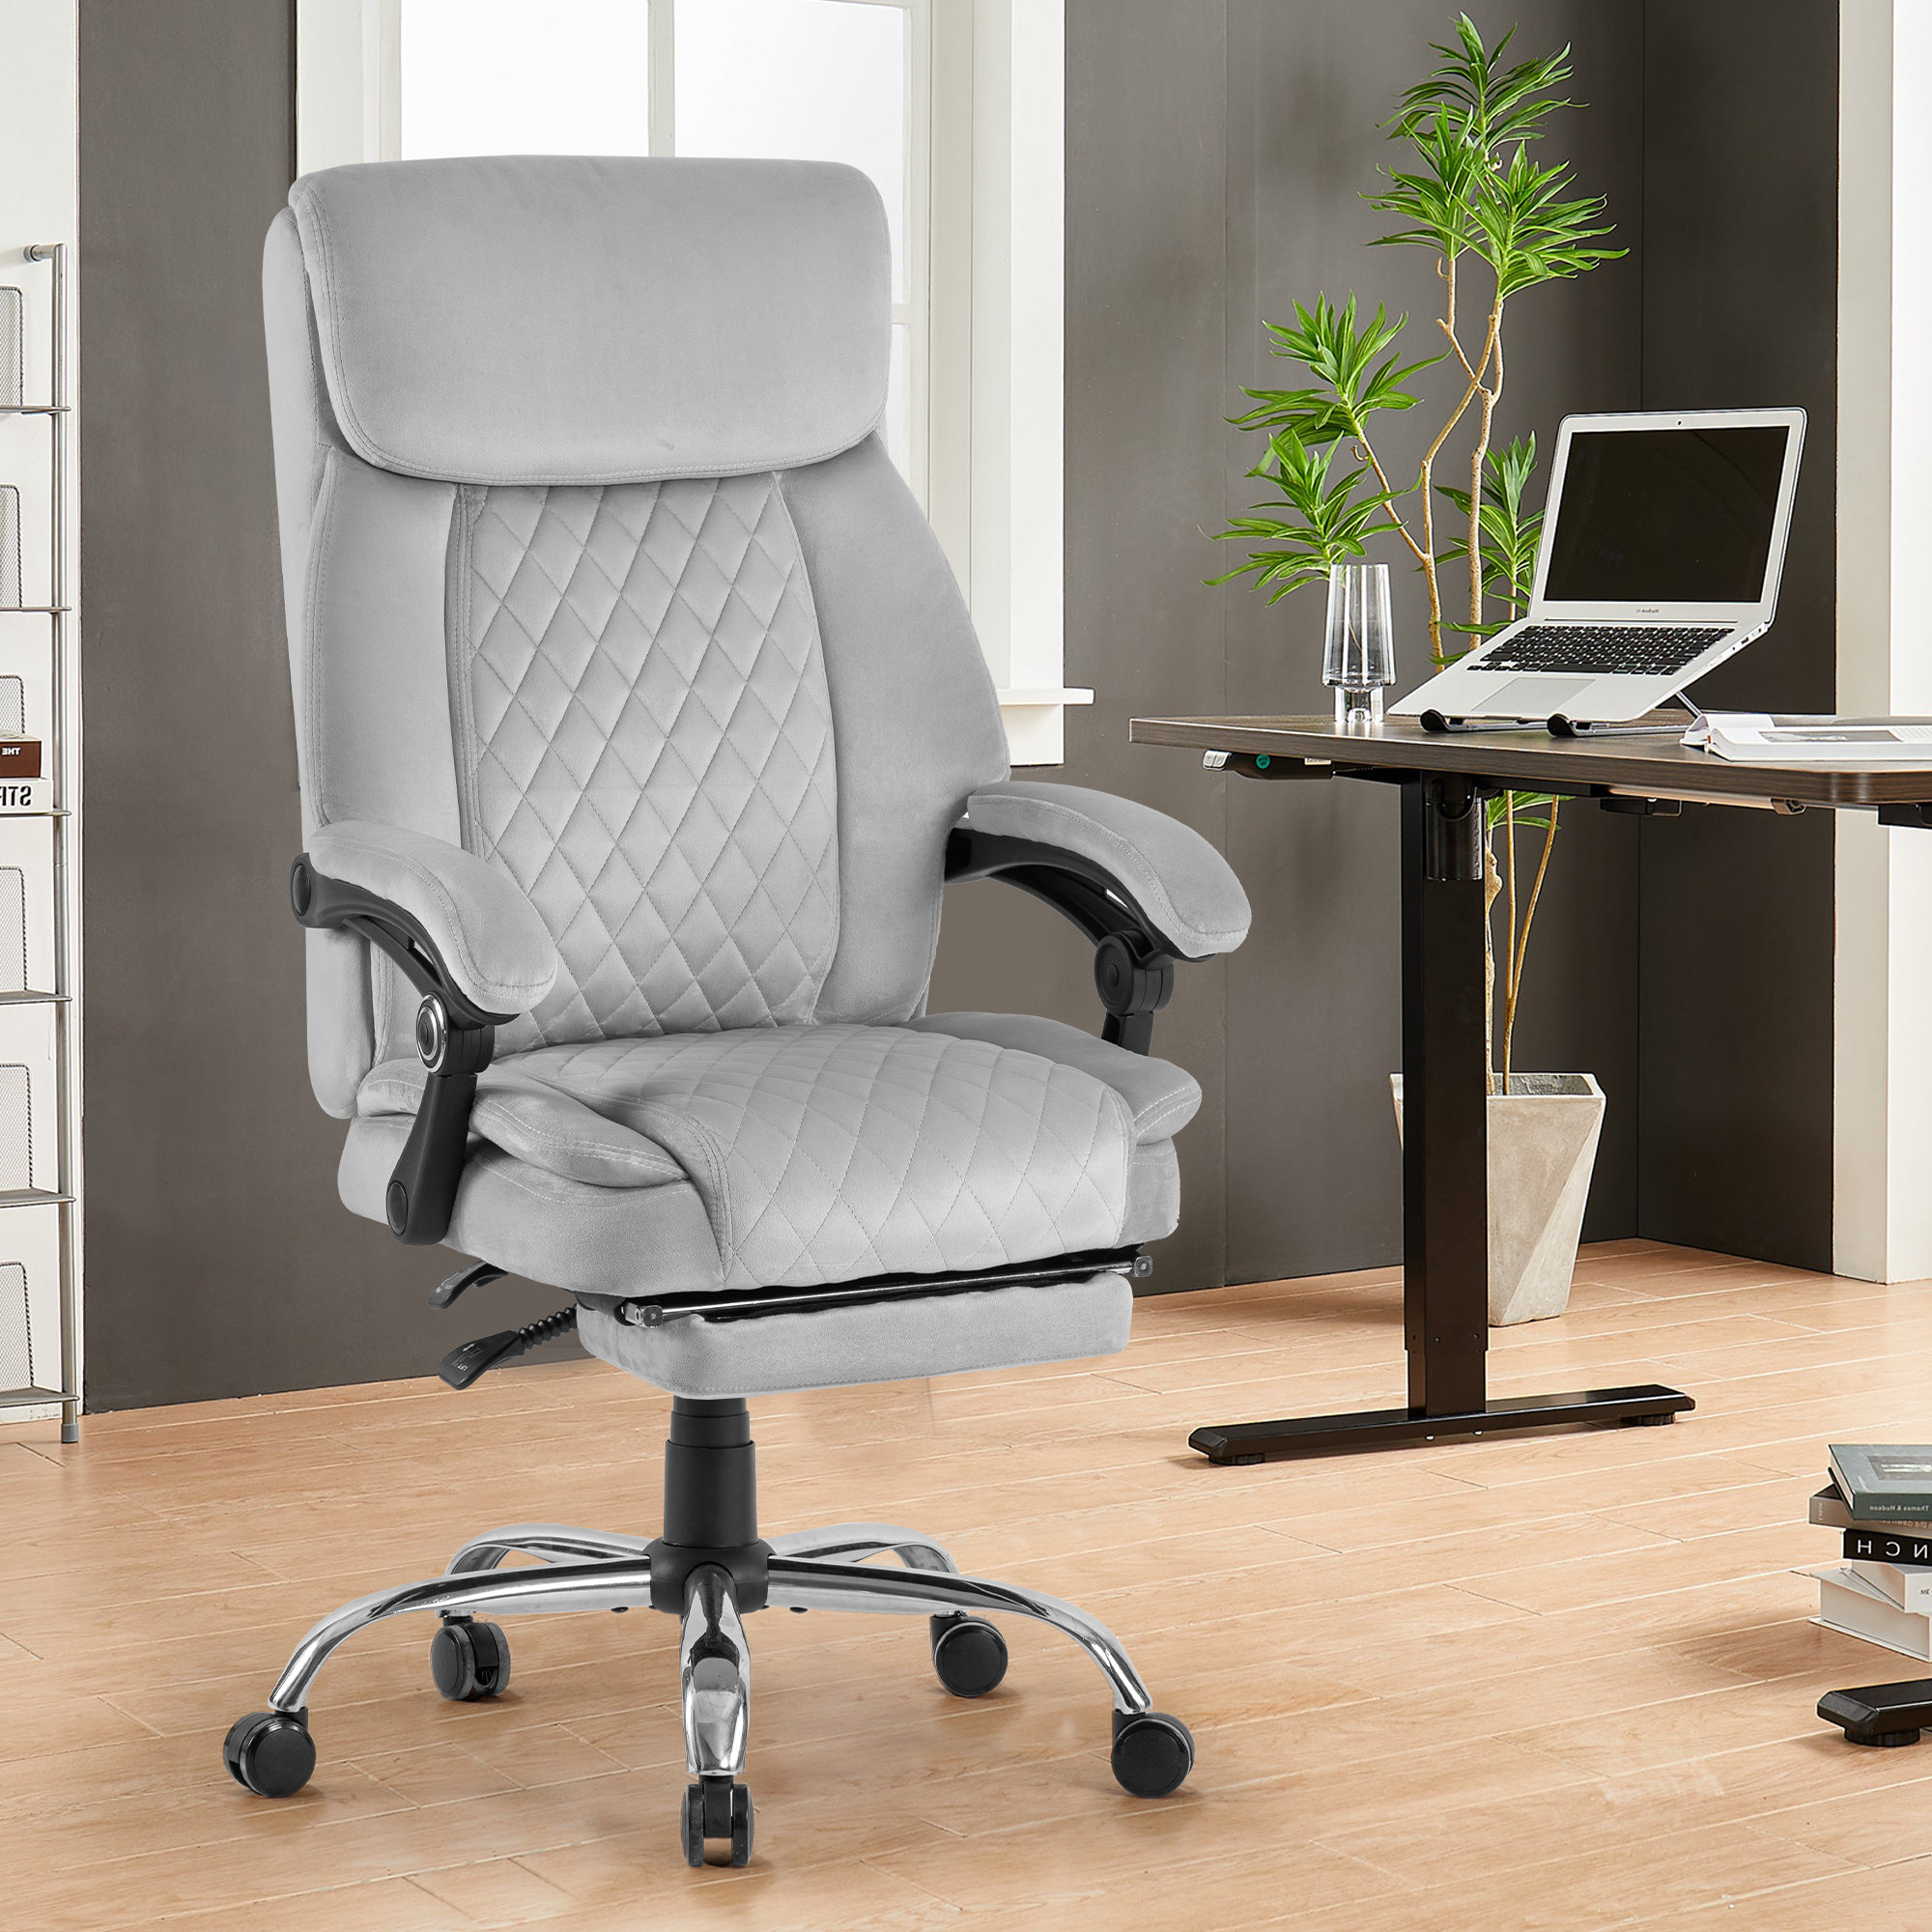 High Back Velvet Ergonomic Home Desk Office Chair with Footrest Everly Quinn Upholstery Color: Pink